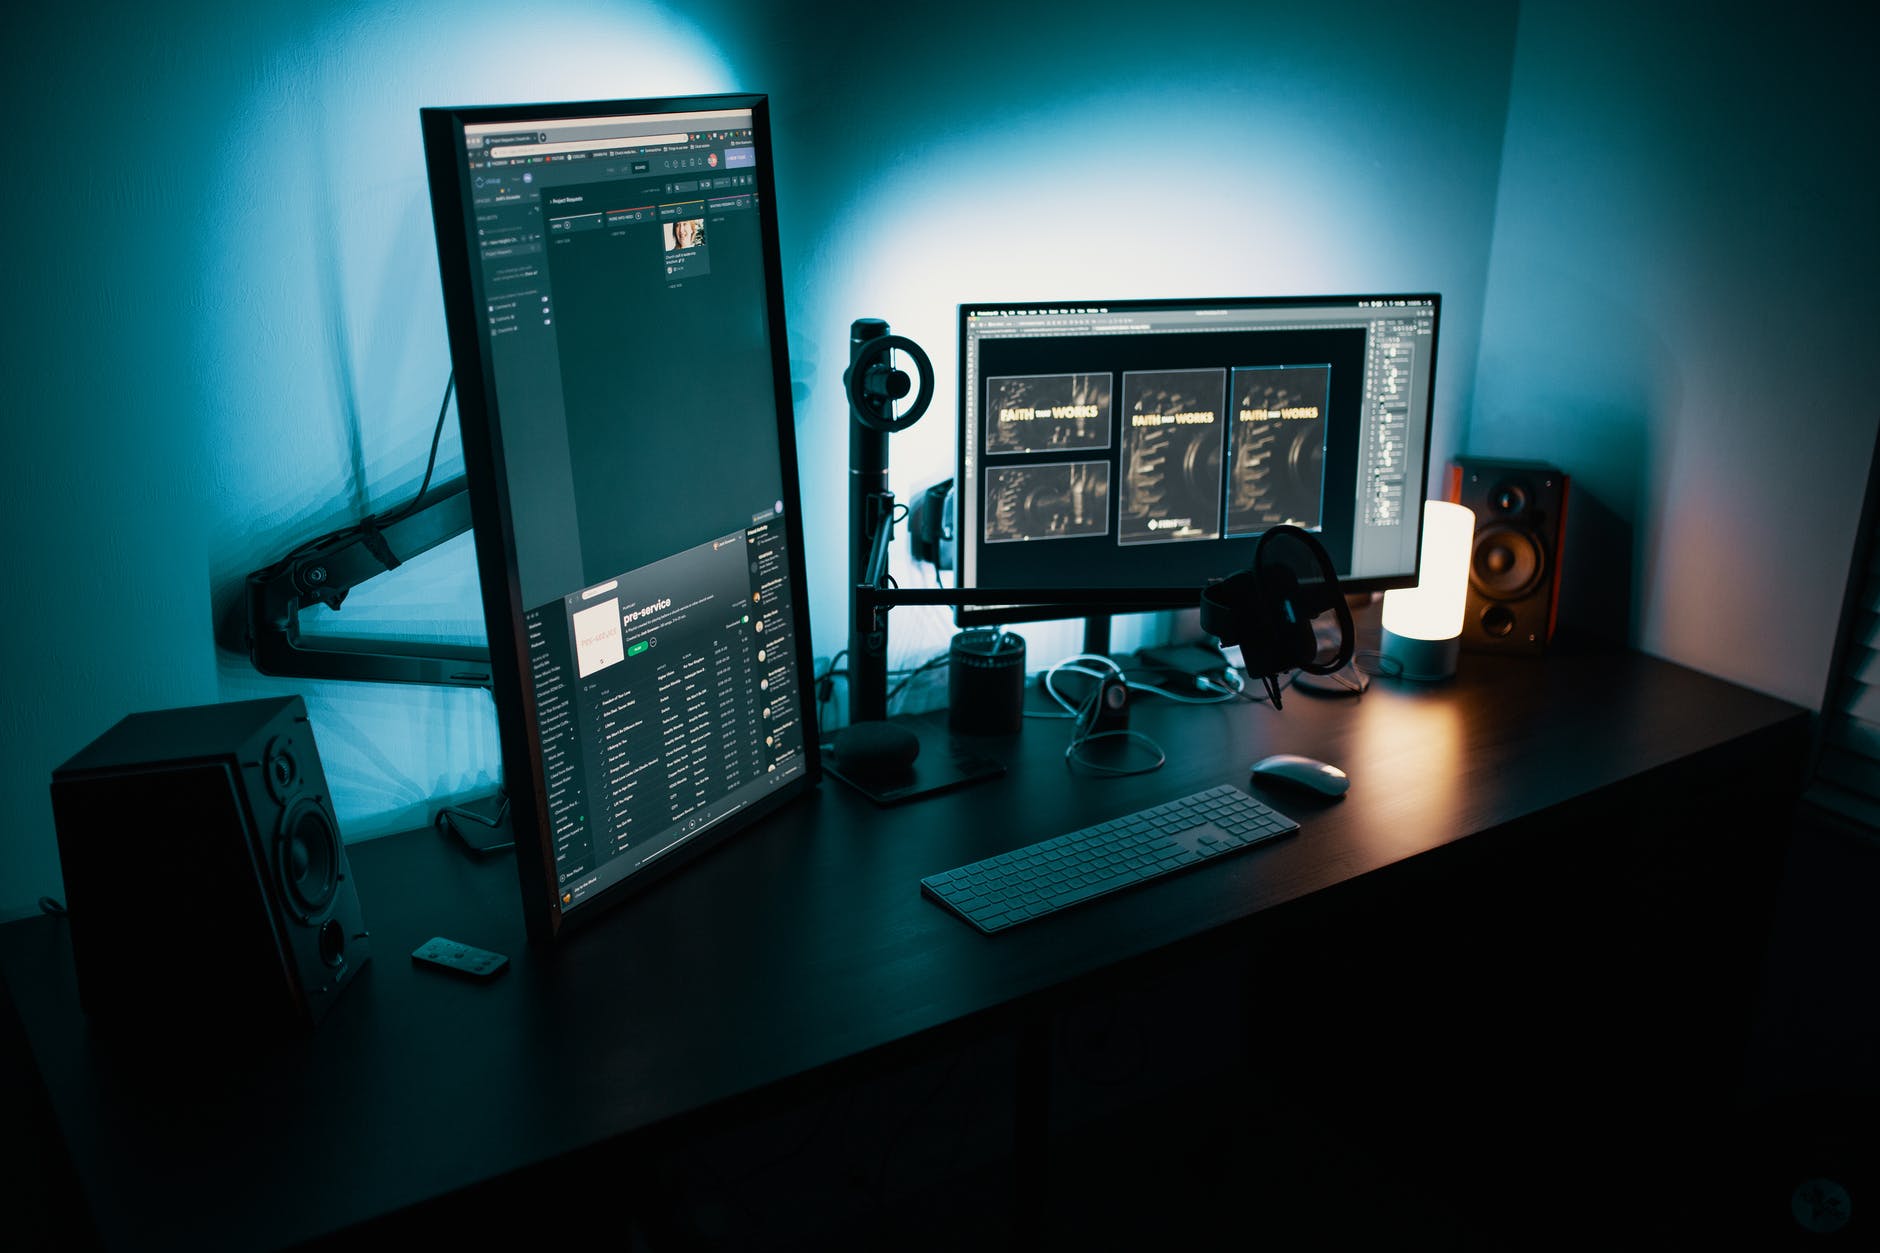 Cool desktop setup